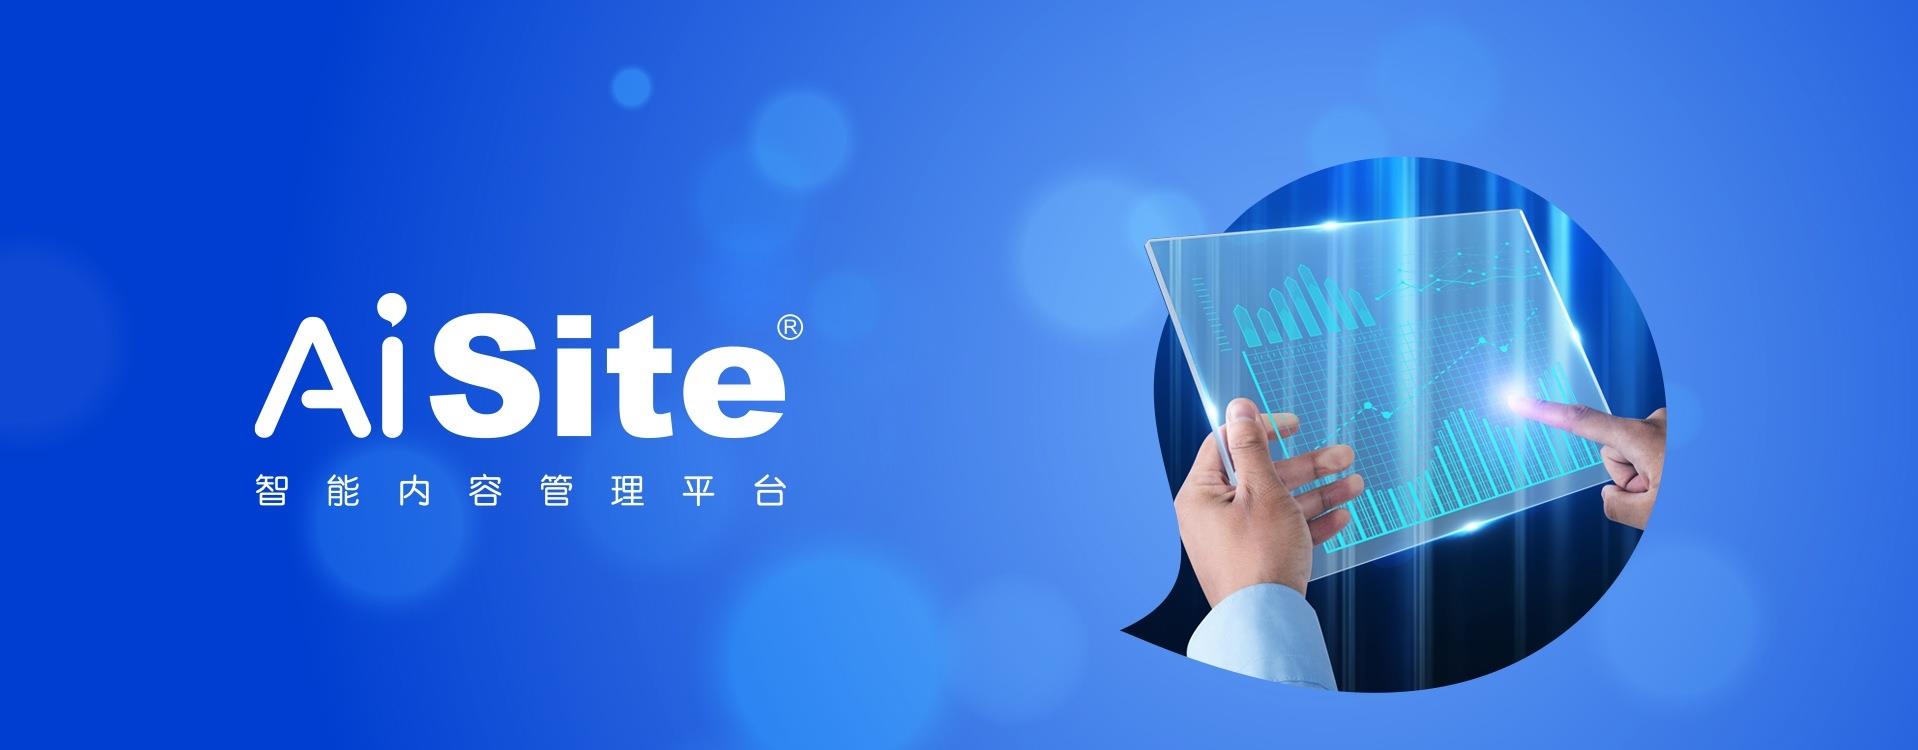 AiSite智能内容管理平台